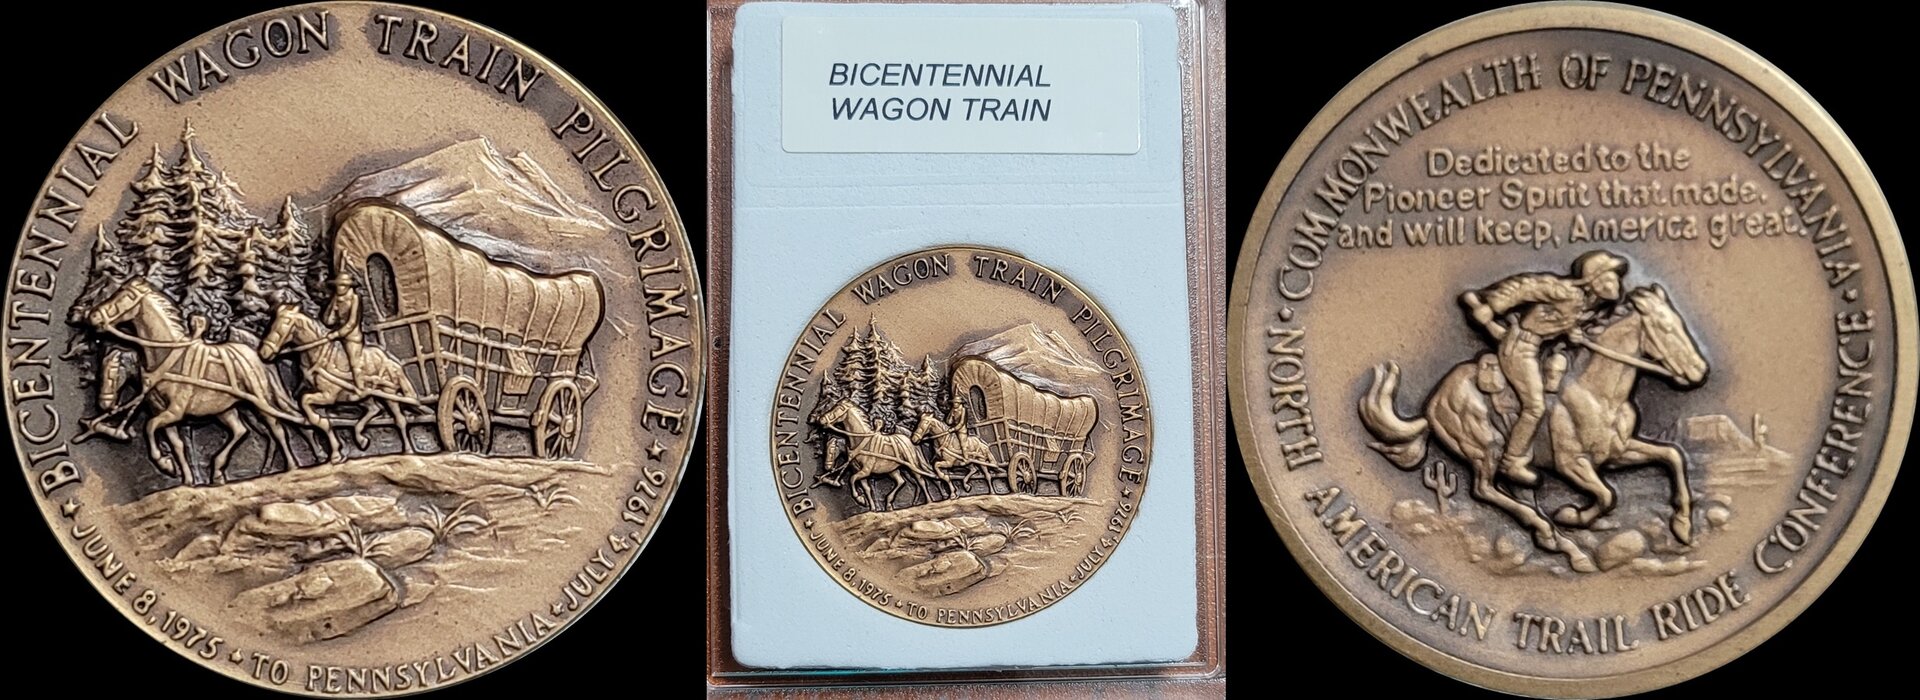 BIcentennial Wagon Train 3.jpg